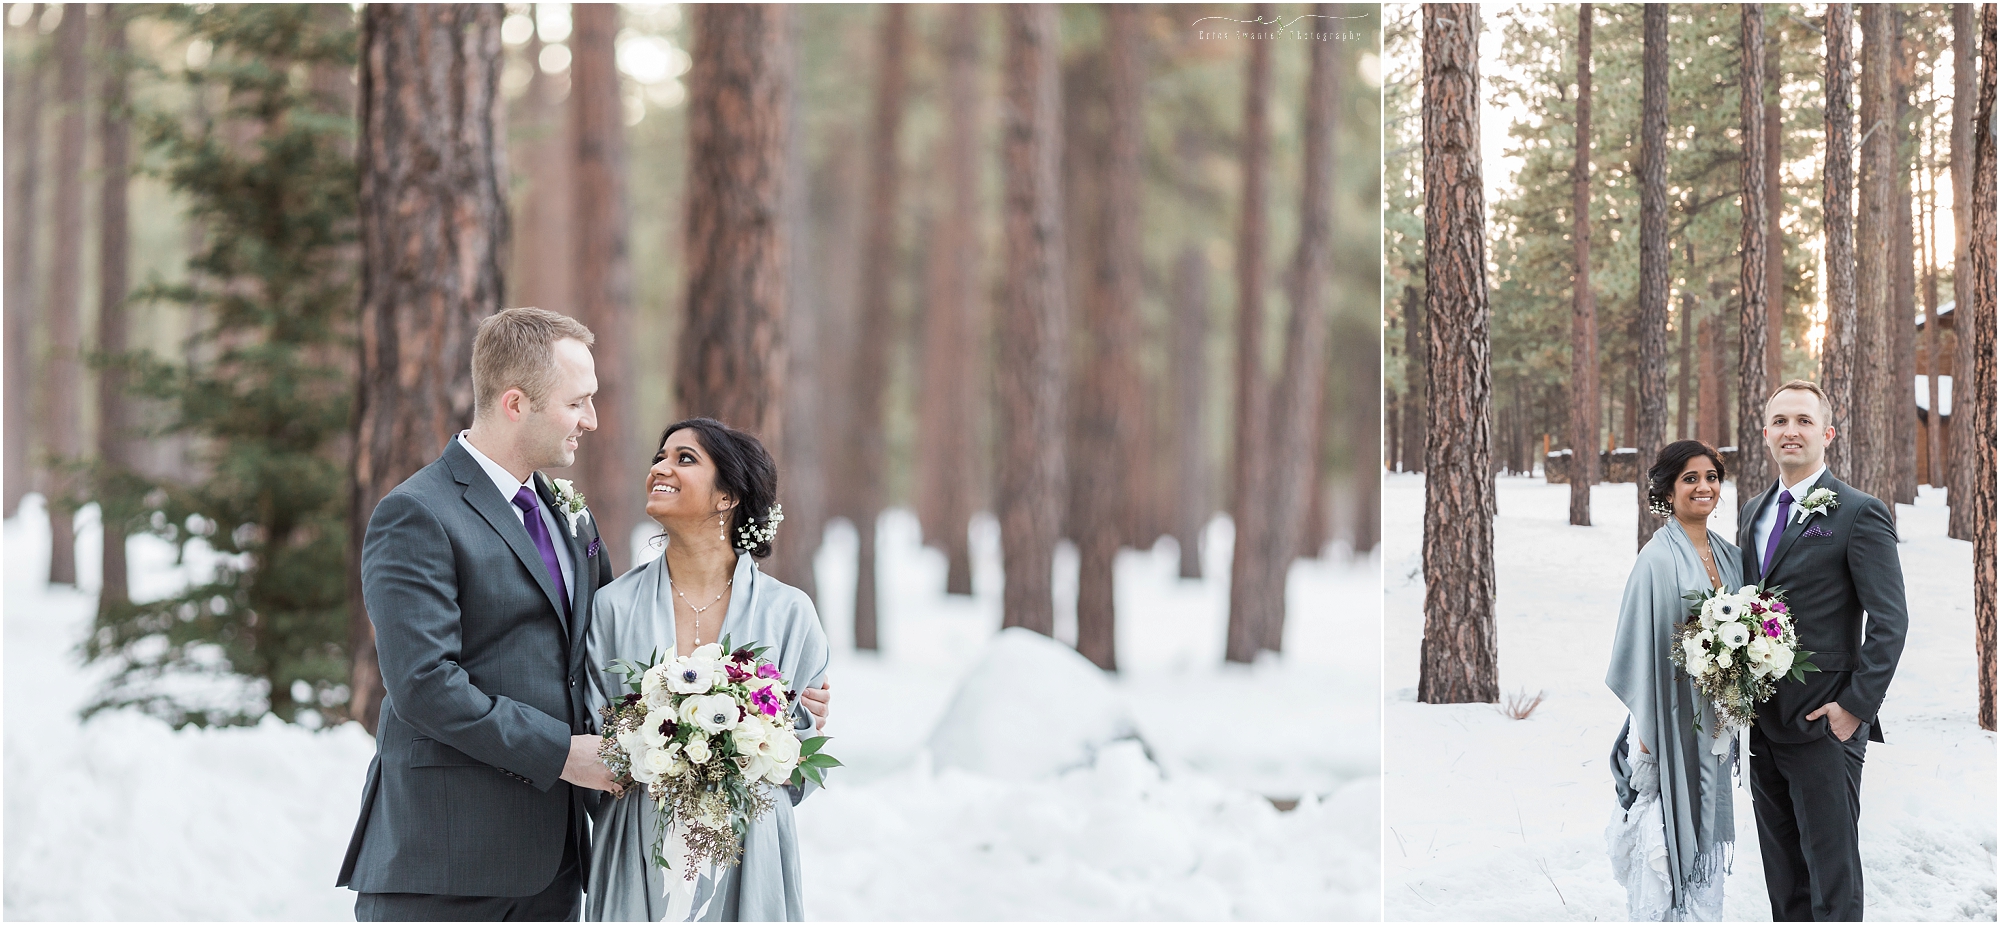 A stunning winter wedding by Bend Oregon wedding photographer Erica Swantek Photography. 